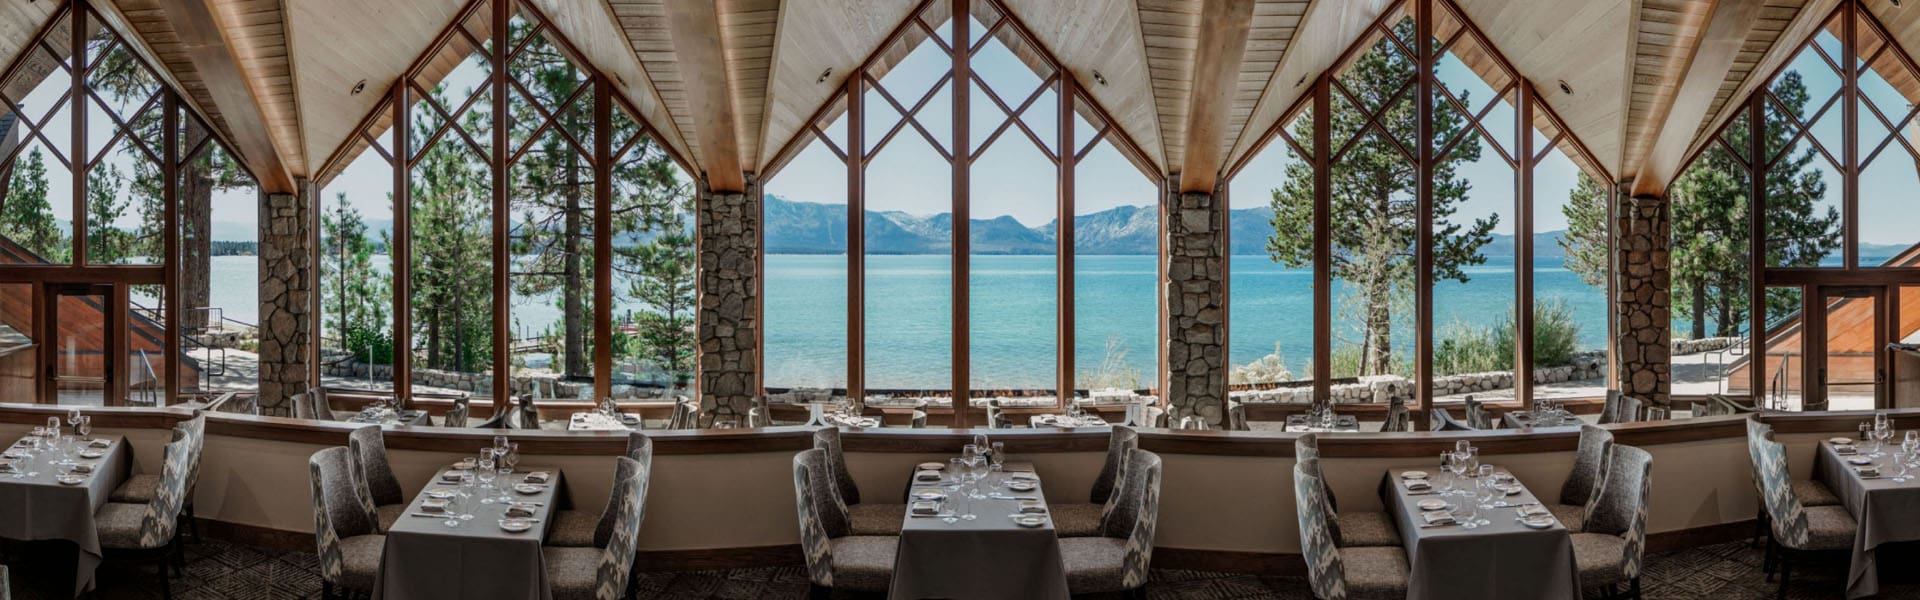 Top 20 Restaurants in Lake Tahoe: An Insider's Guide